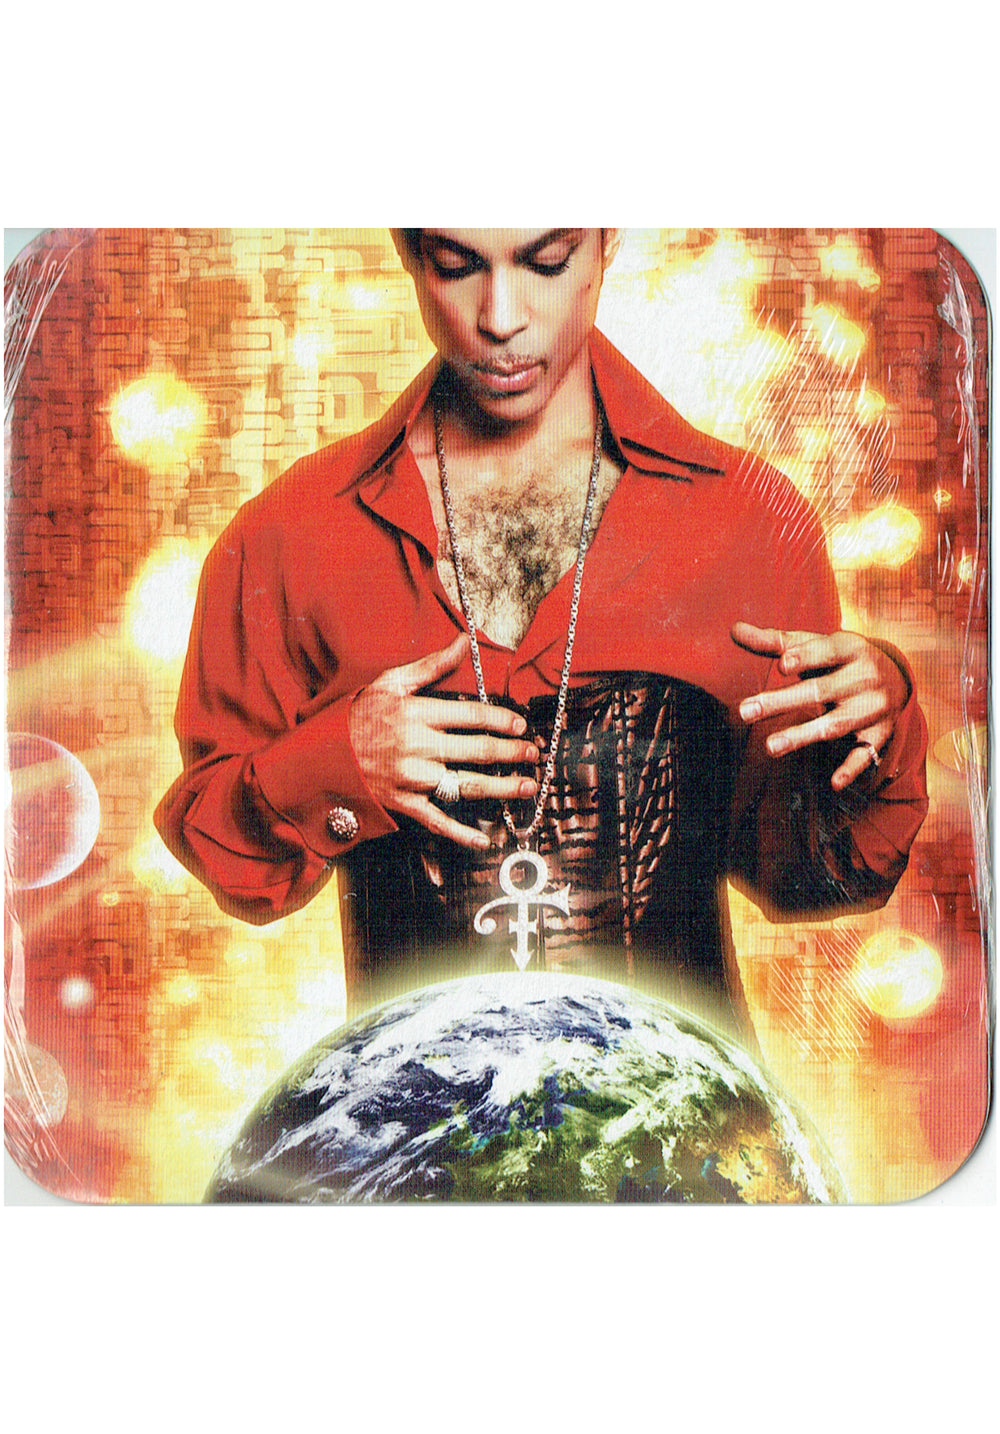 Prince Planet Earth UK CD Album 2007 Original 10 Tracks SEALED - ROUND EDGES SMS